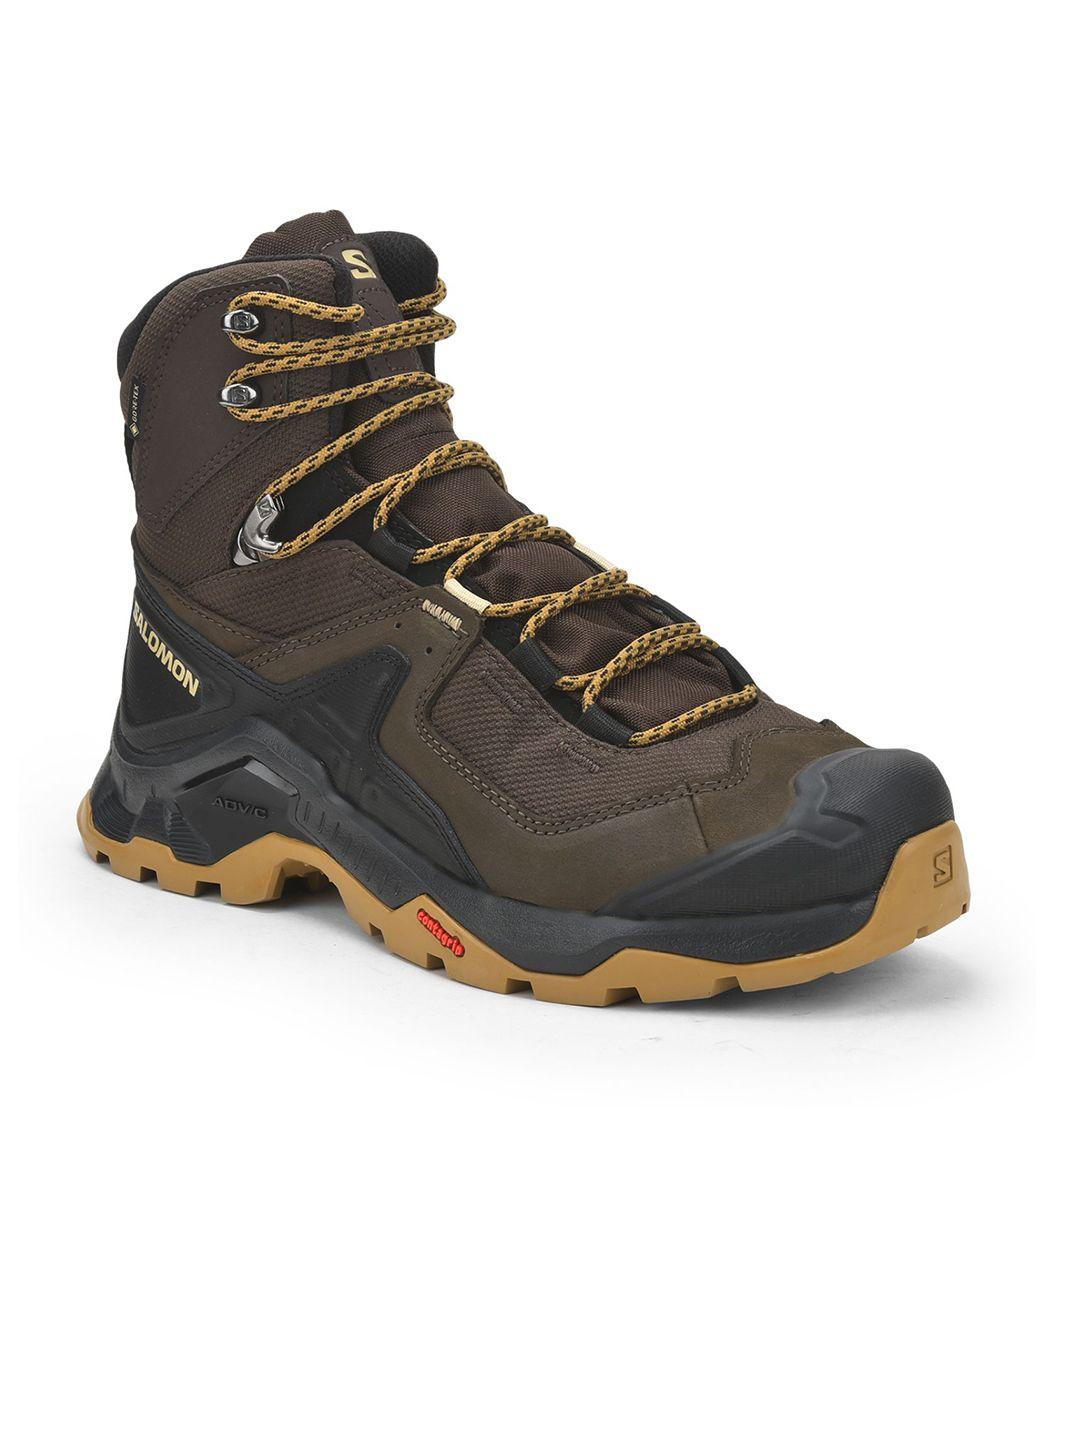 salomon-men-brown-leather-trekking-shoes